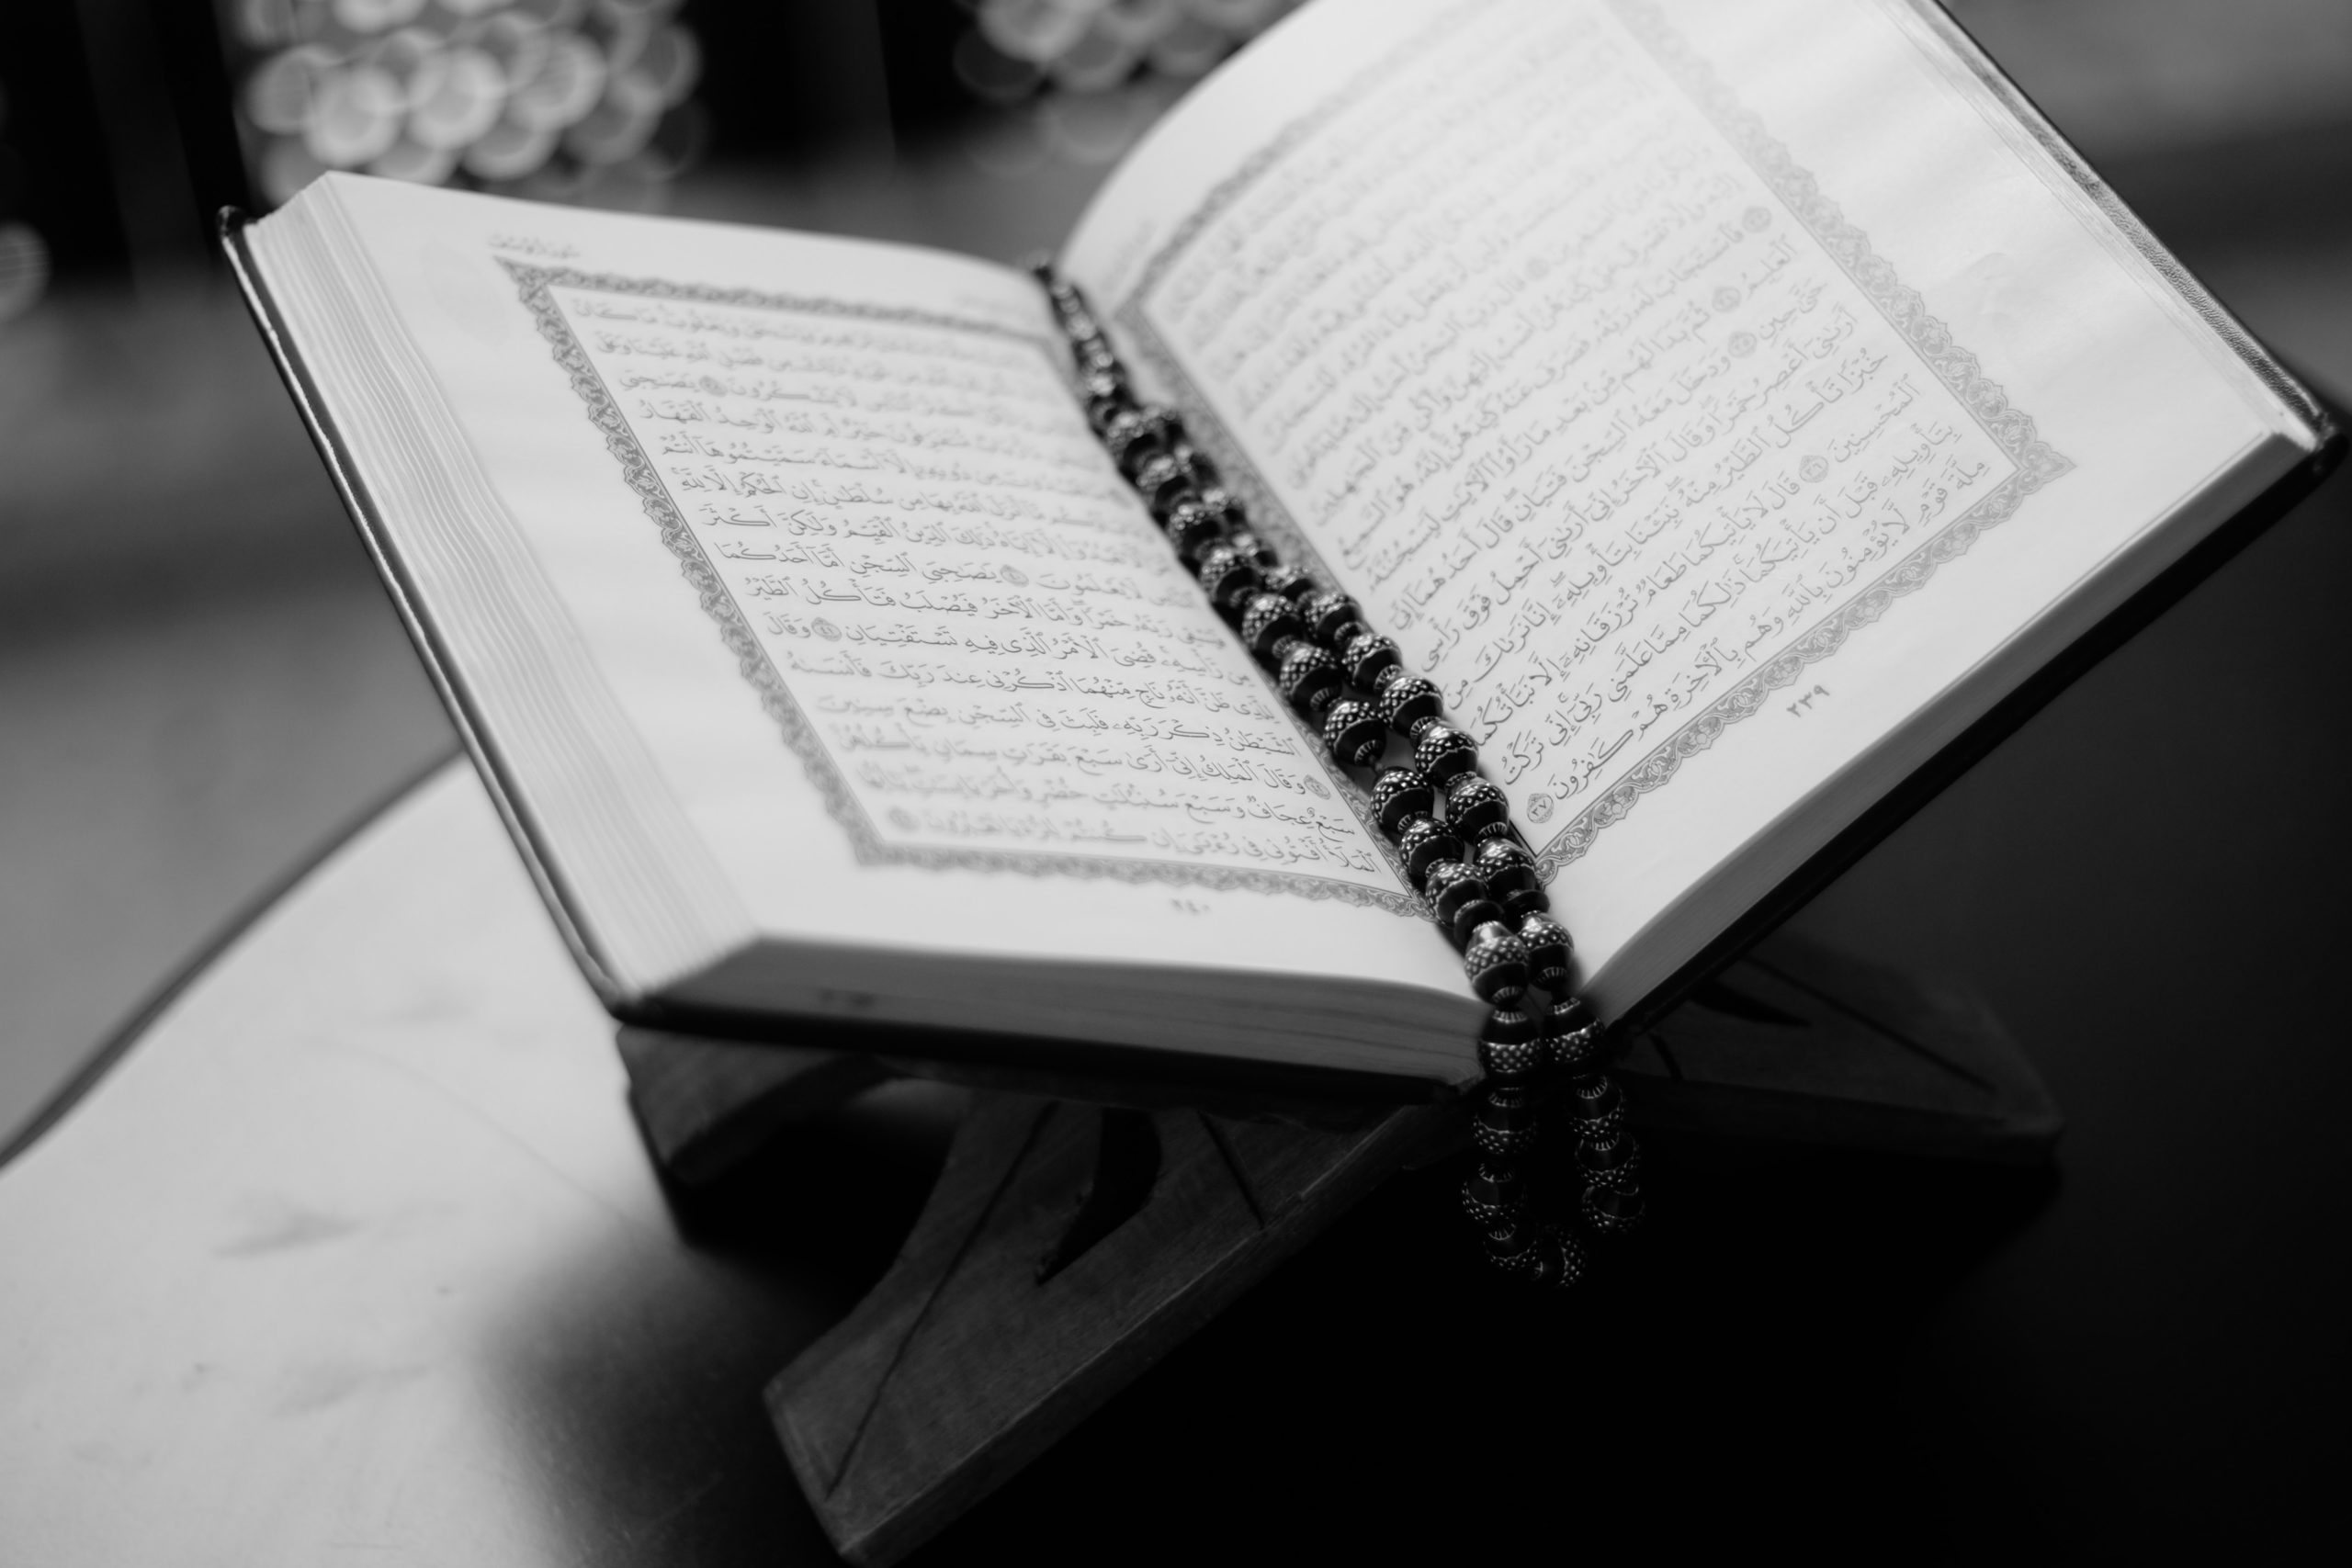 The Atlantic: Karina Piser on French Islam